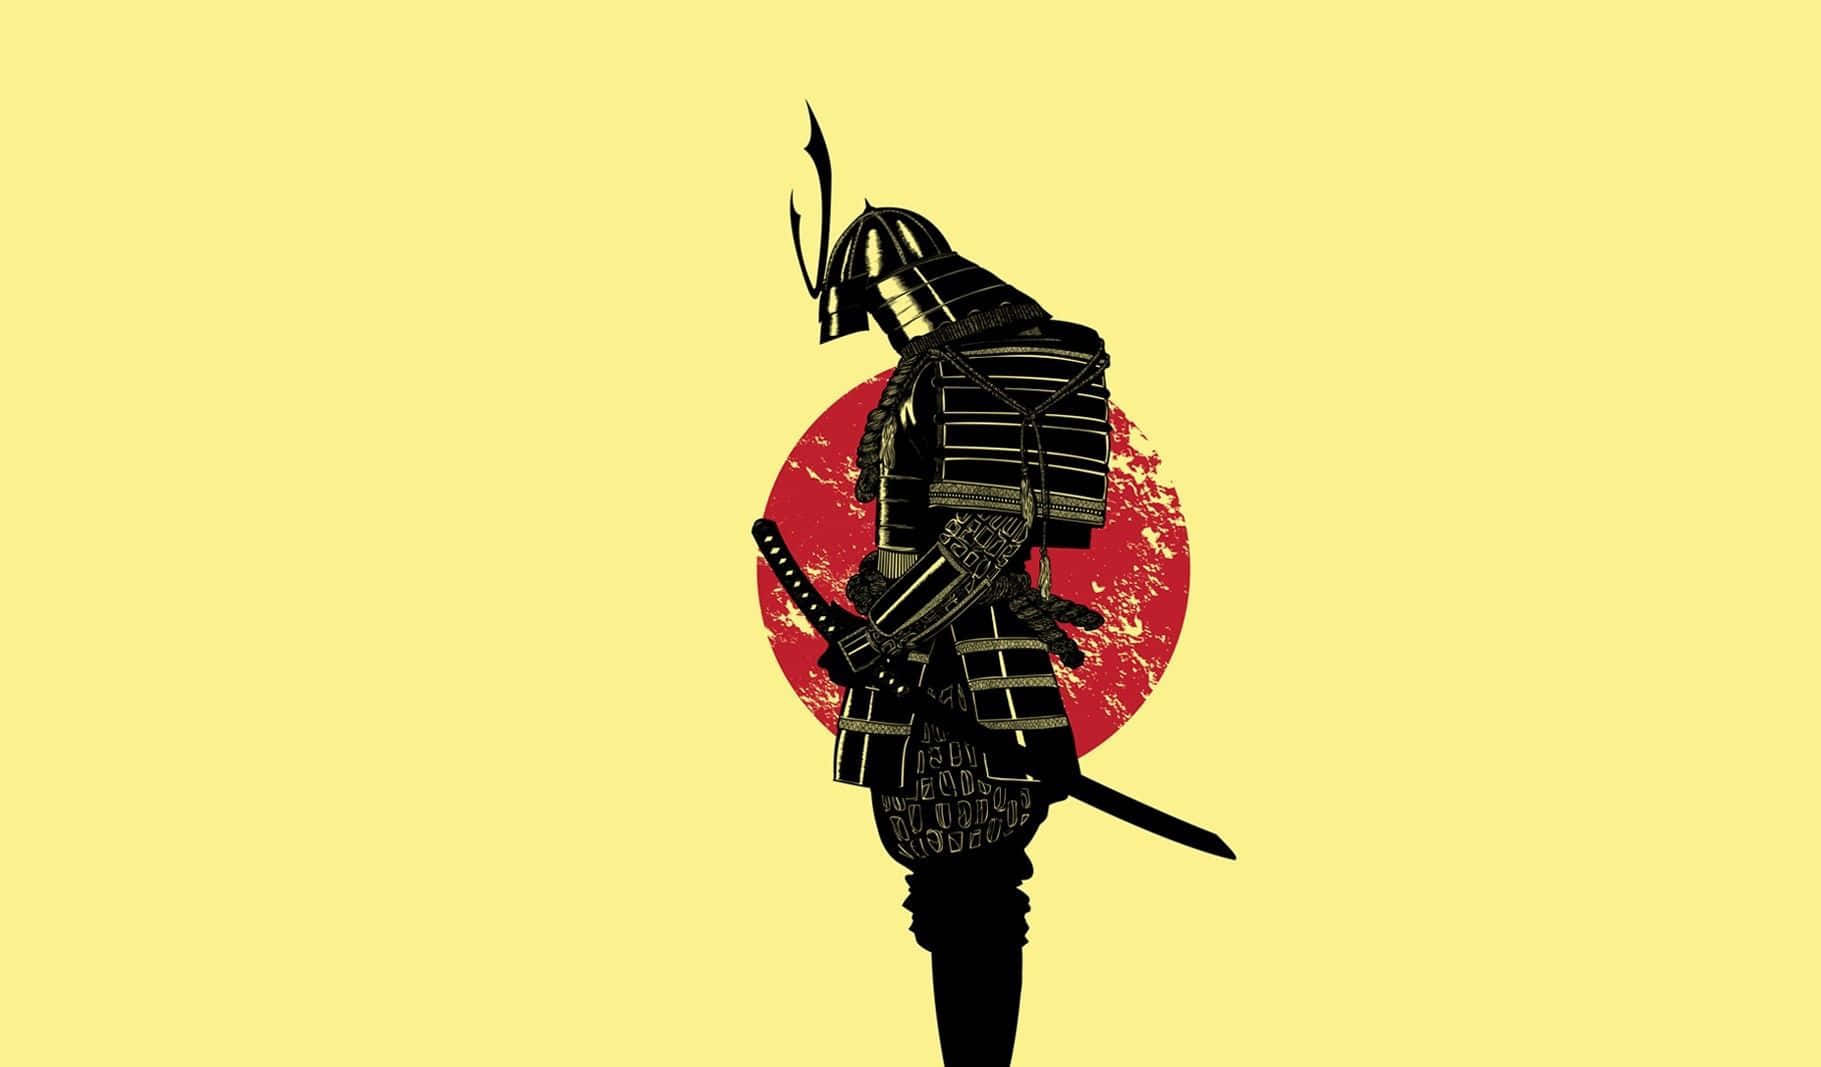 Fearless Samurai Warrior In Battle Wallpaper